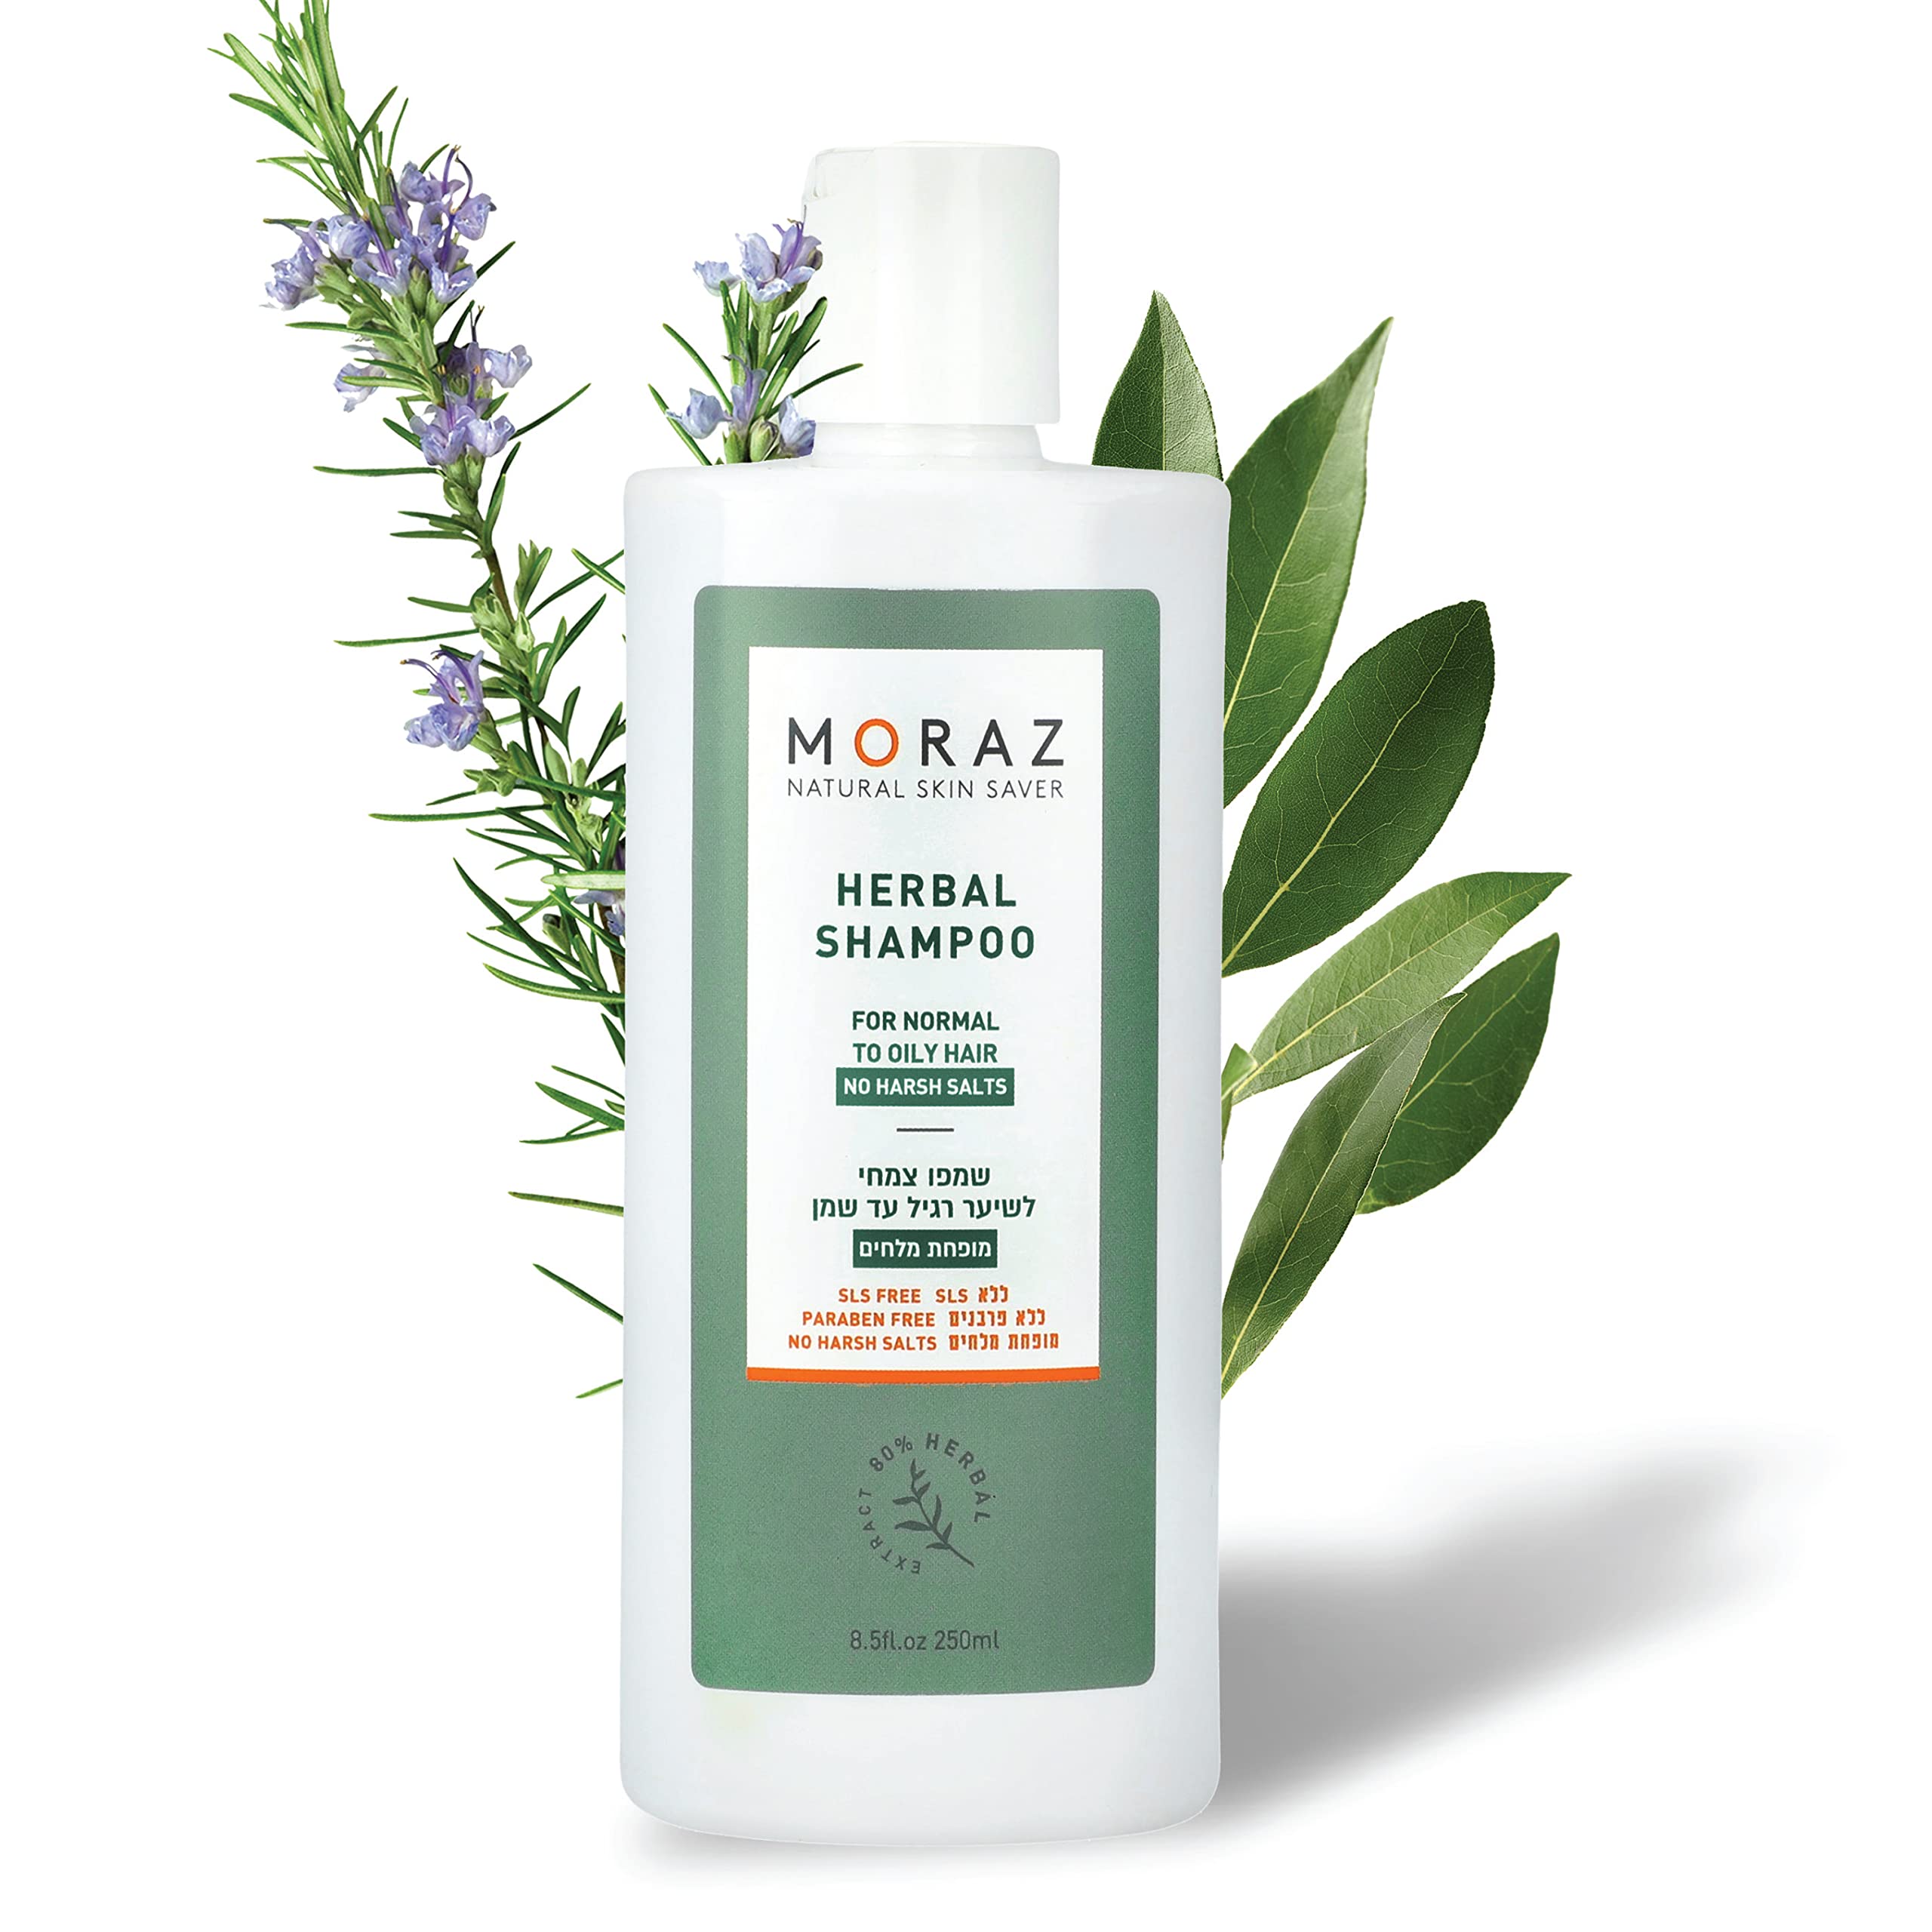 Moraz Natural Repair Moisturizing Shampoo for Normal to Oily Hair with Herbal Essences Shampoo for Women, Vegan Natural Hair Treatment, Organic Shampoo Paraben and Cruelty Free, 17 FL.O